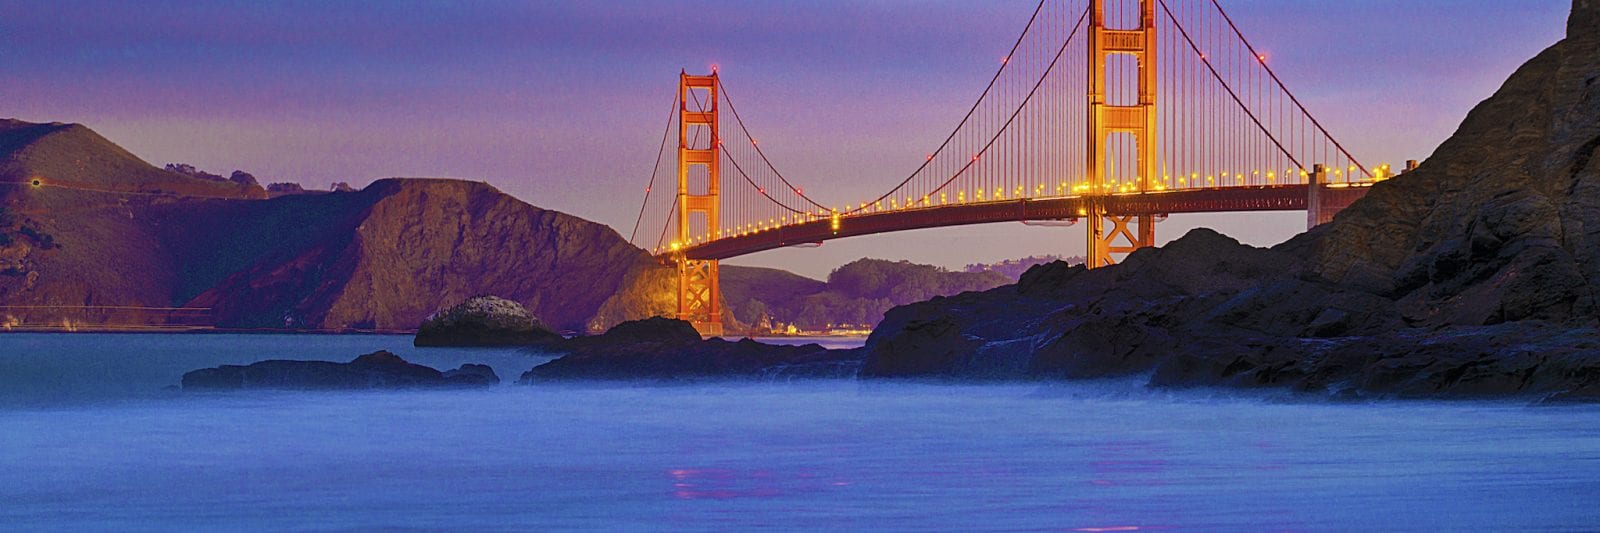 Golden Gate Bridge Reflection Baker Beach California